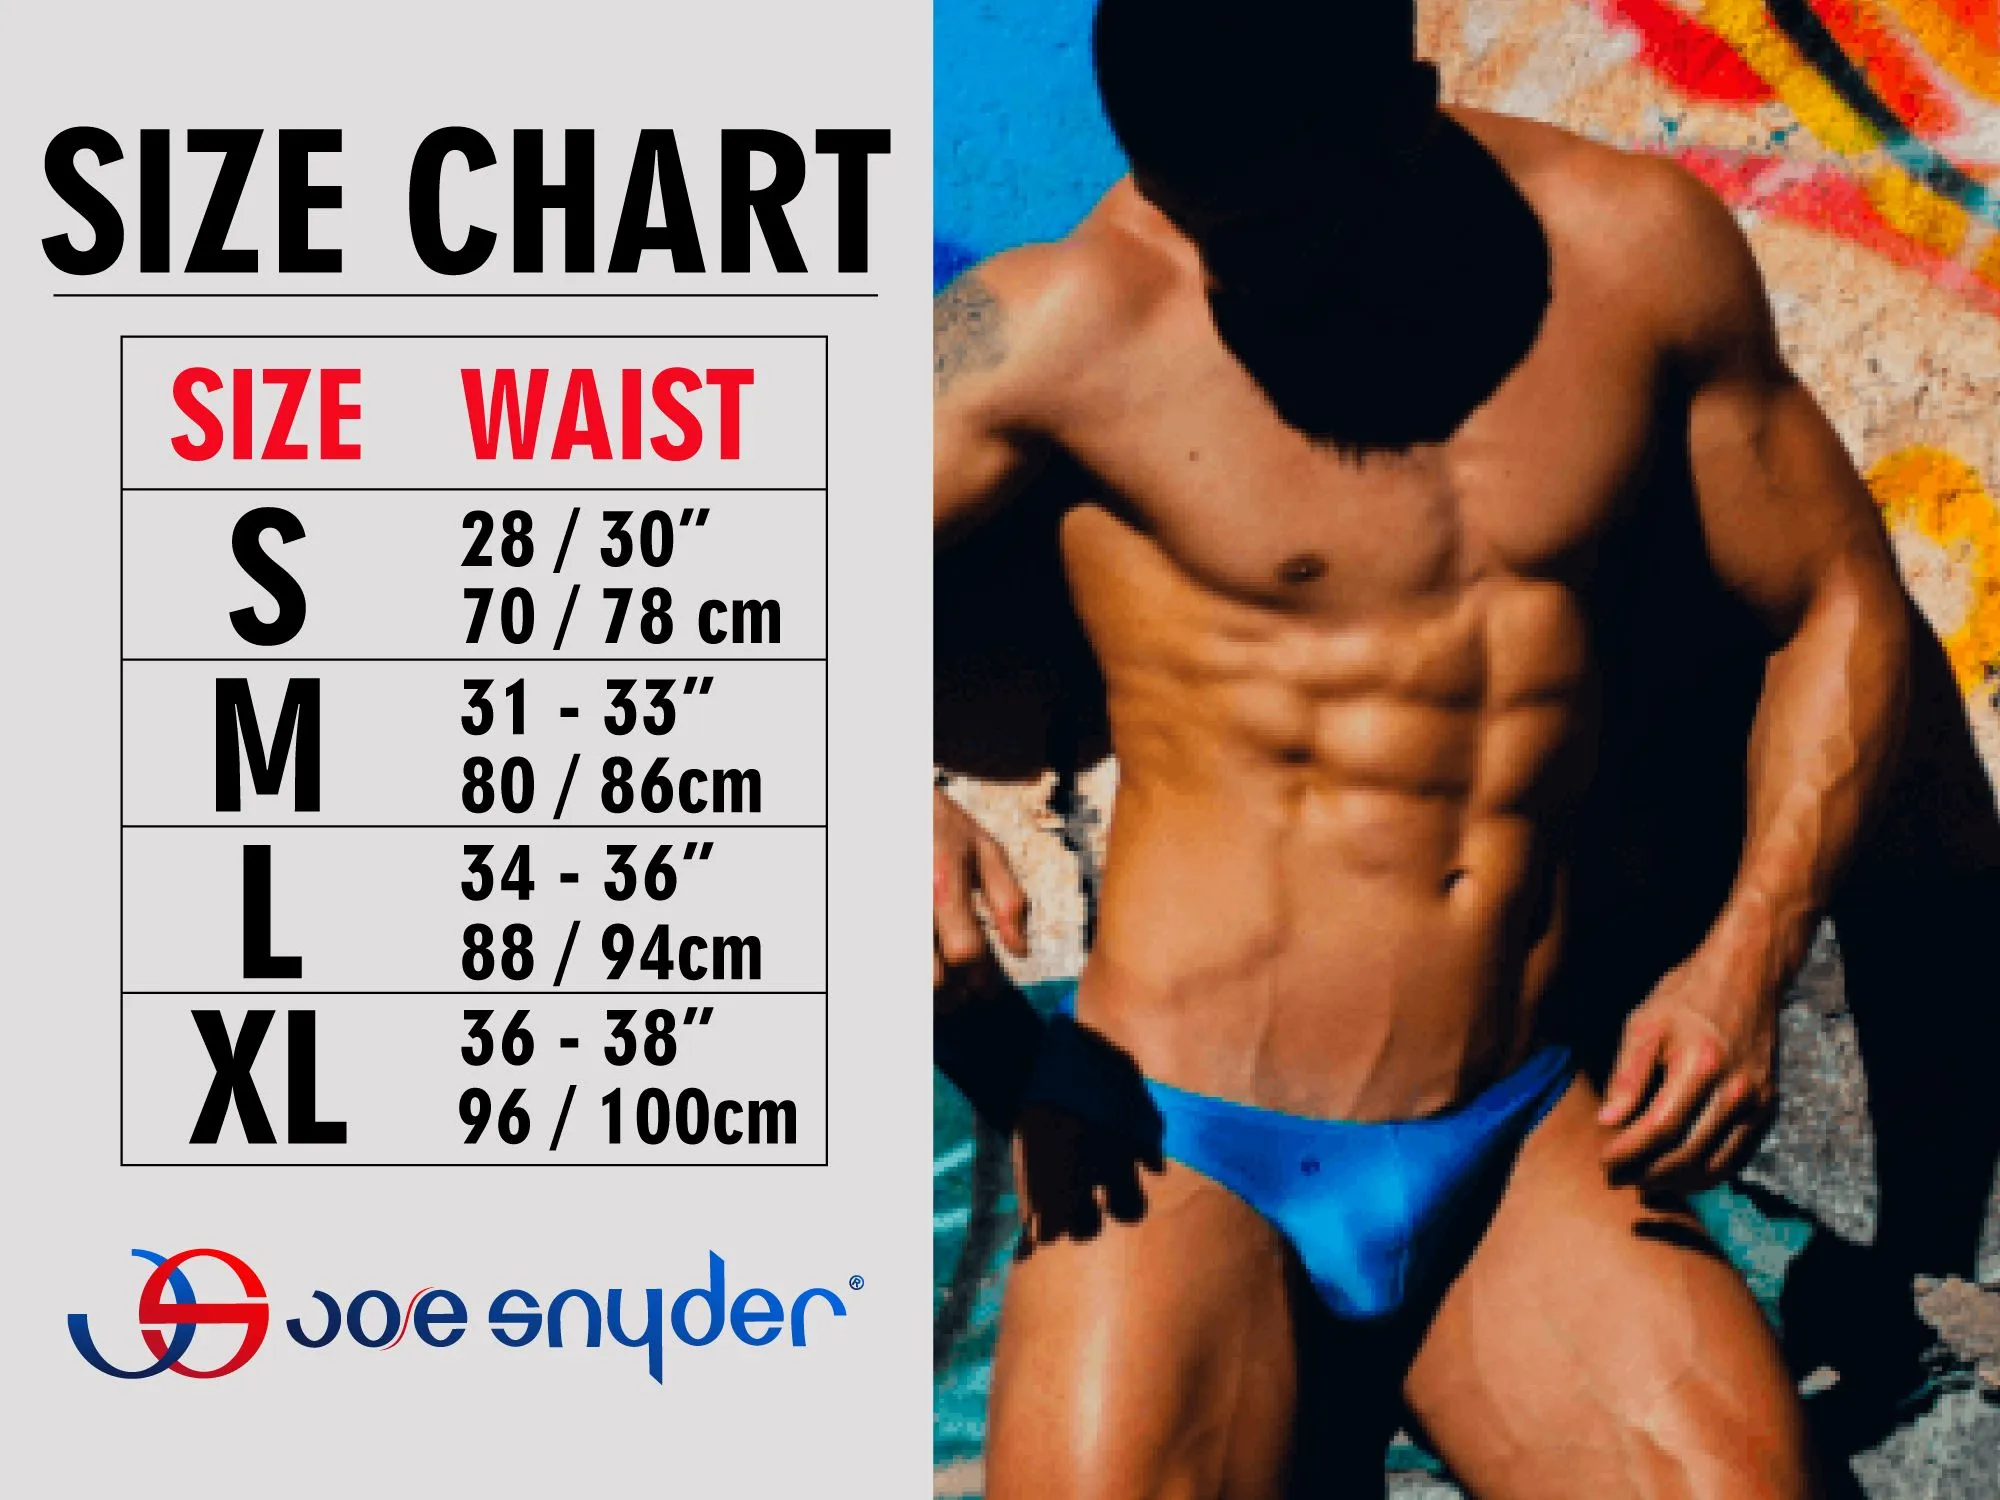 Joe Snyder Size Chart